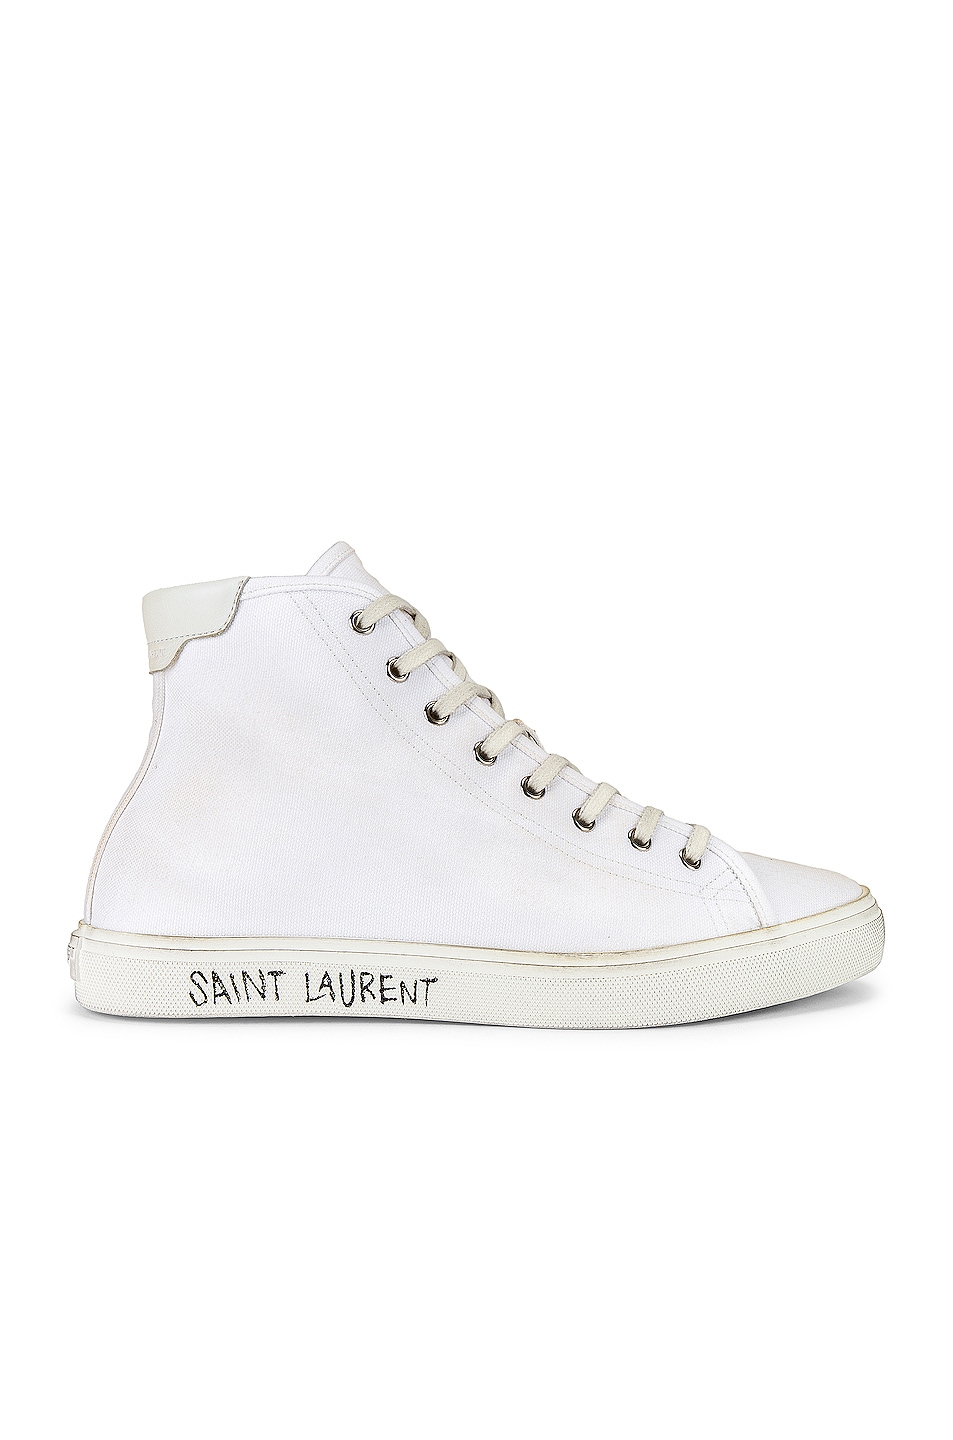 Image 1 of Saint Laurent Malibu Mid Top Sneaker in Blanc Optique